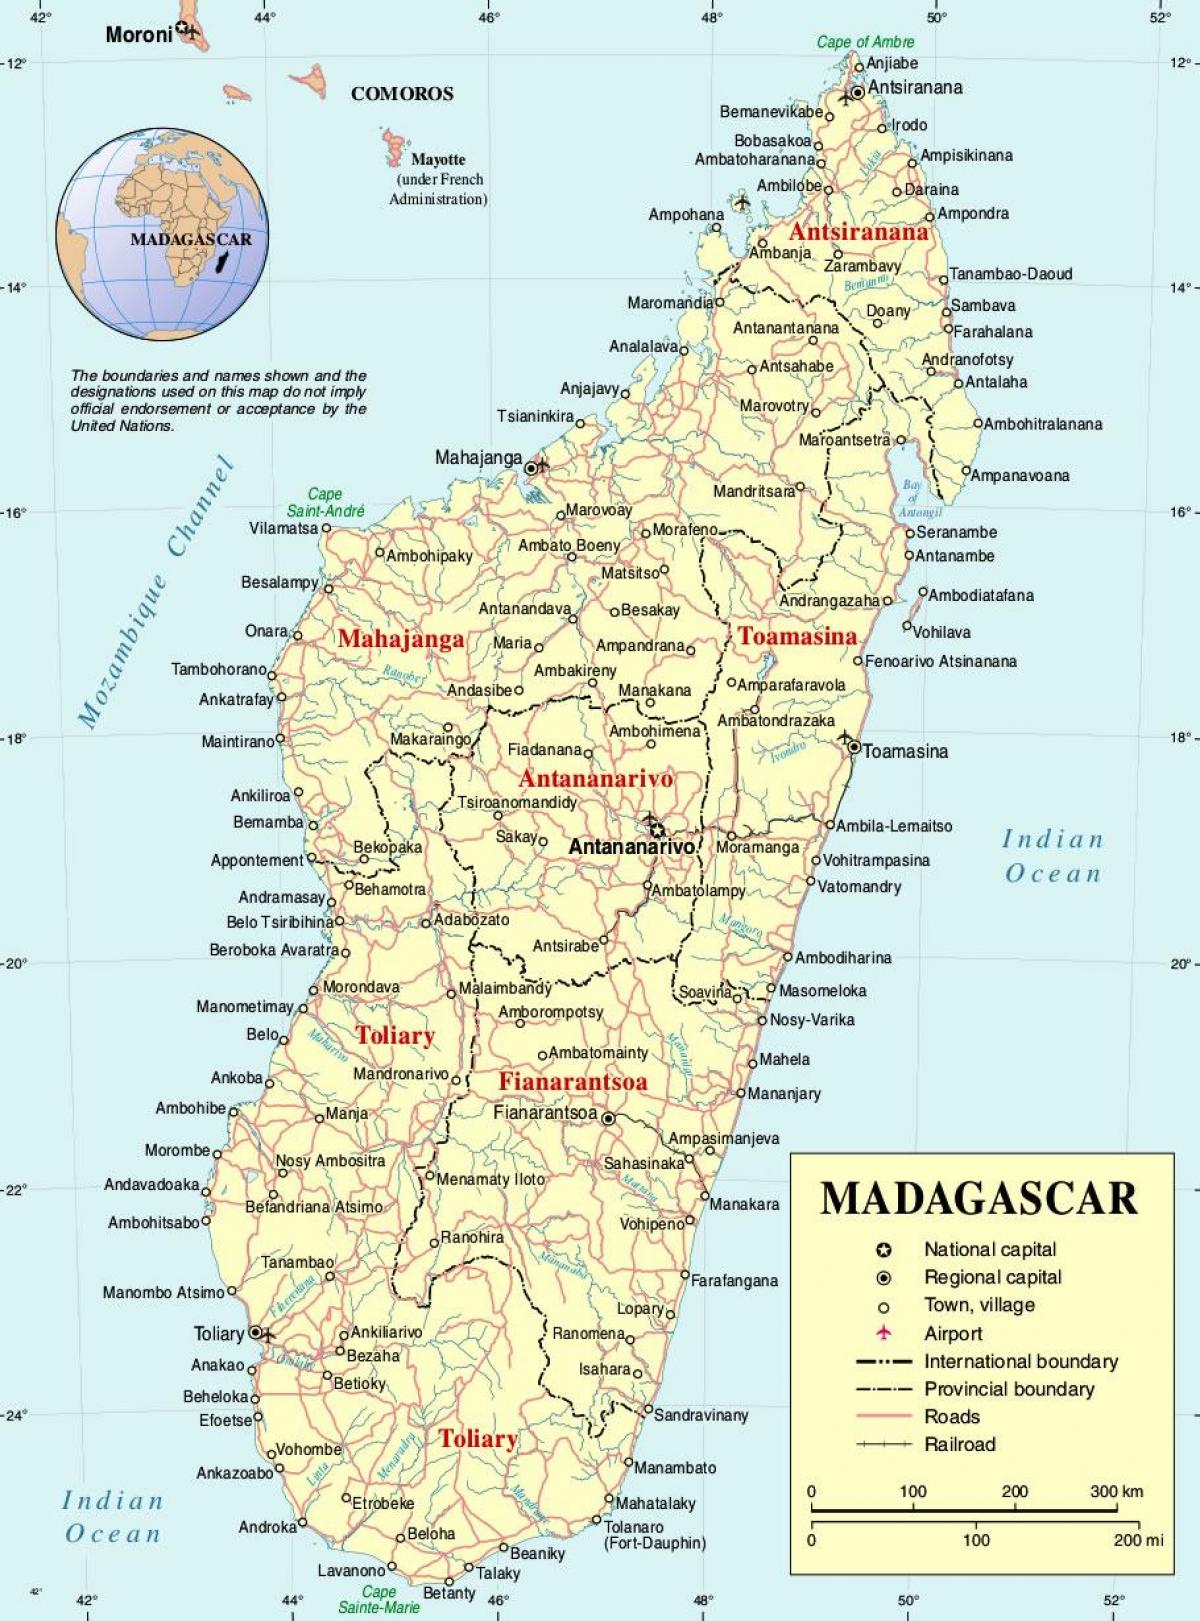 Madagaskar hartë me qytetet